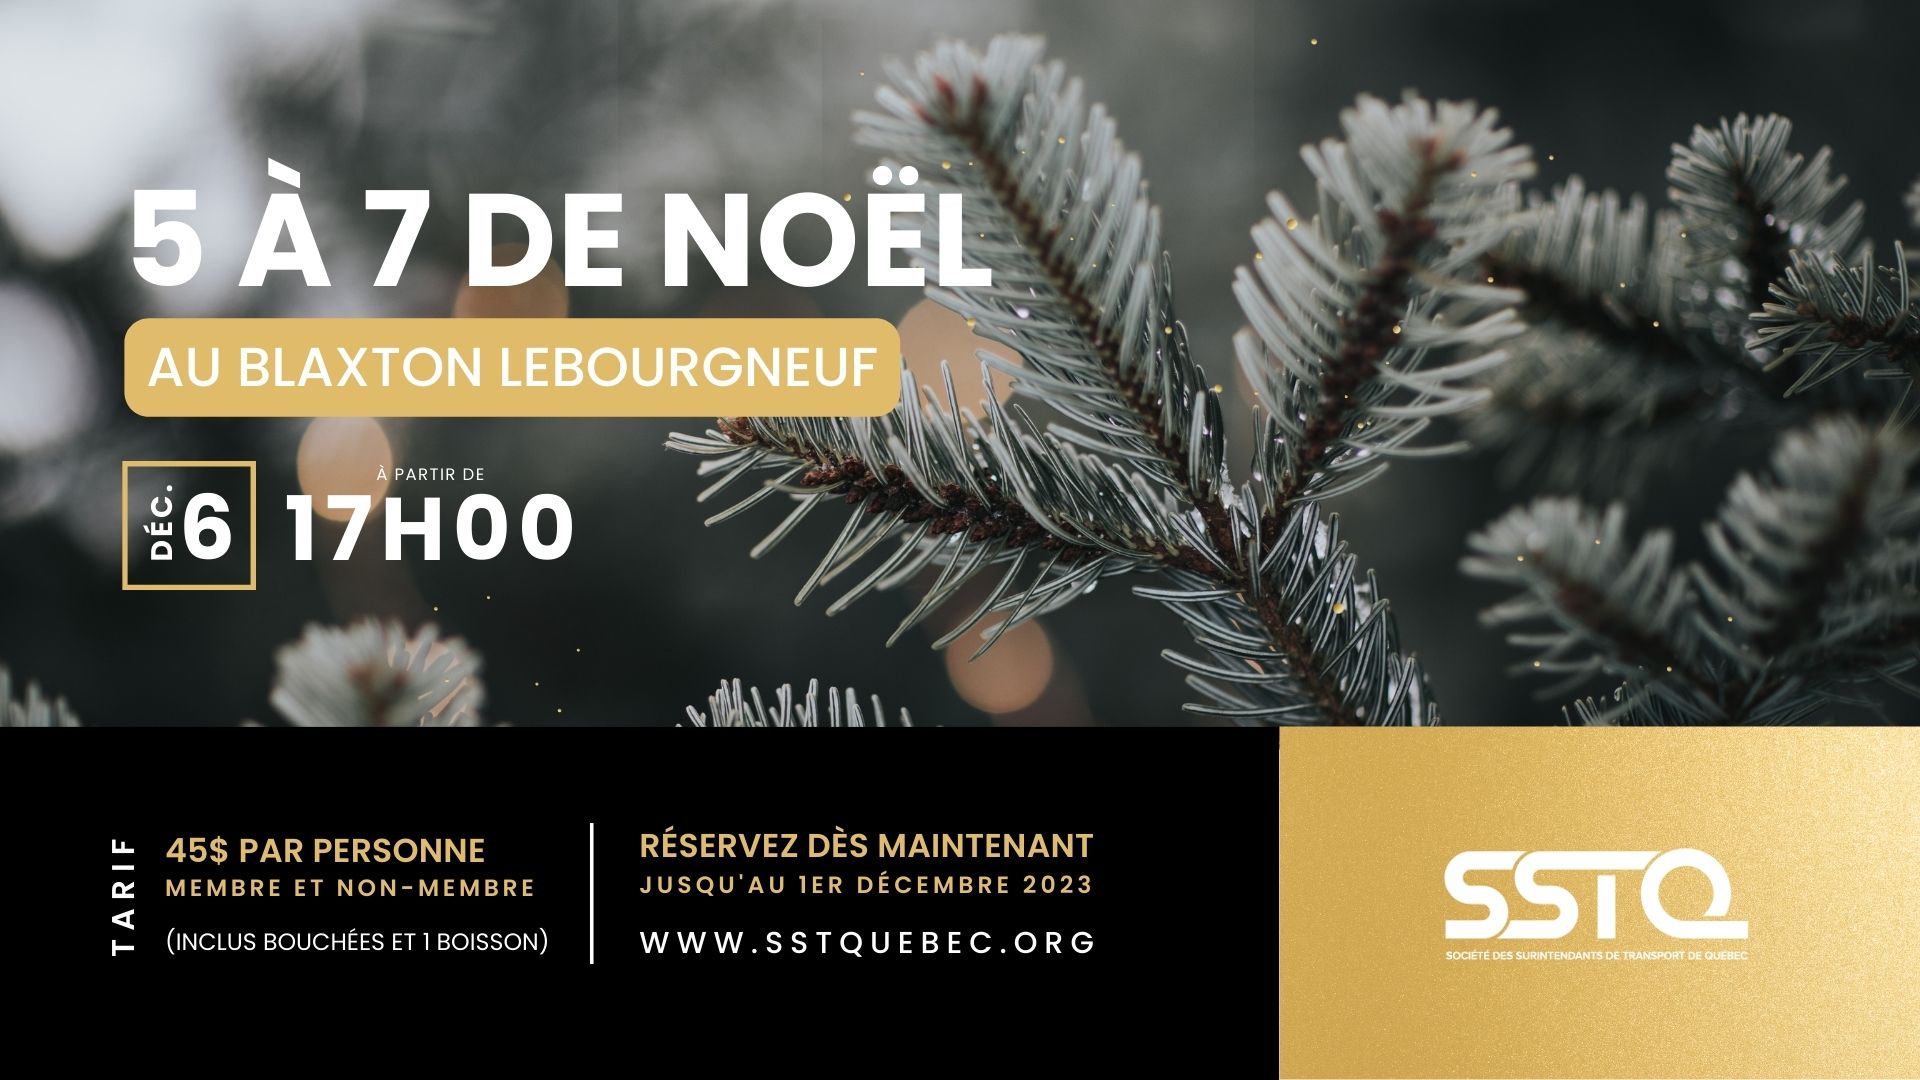 5 à 7 de Noël | SST de Québec